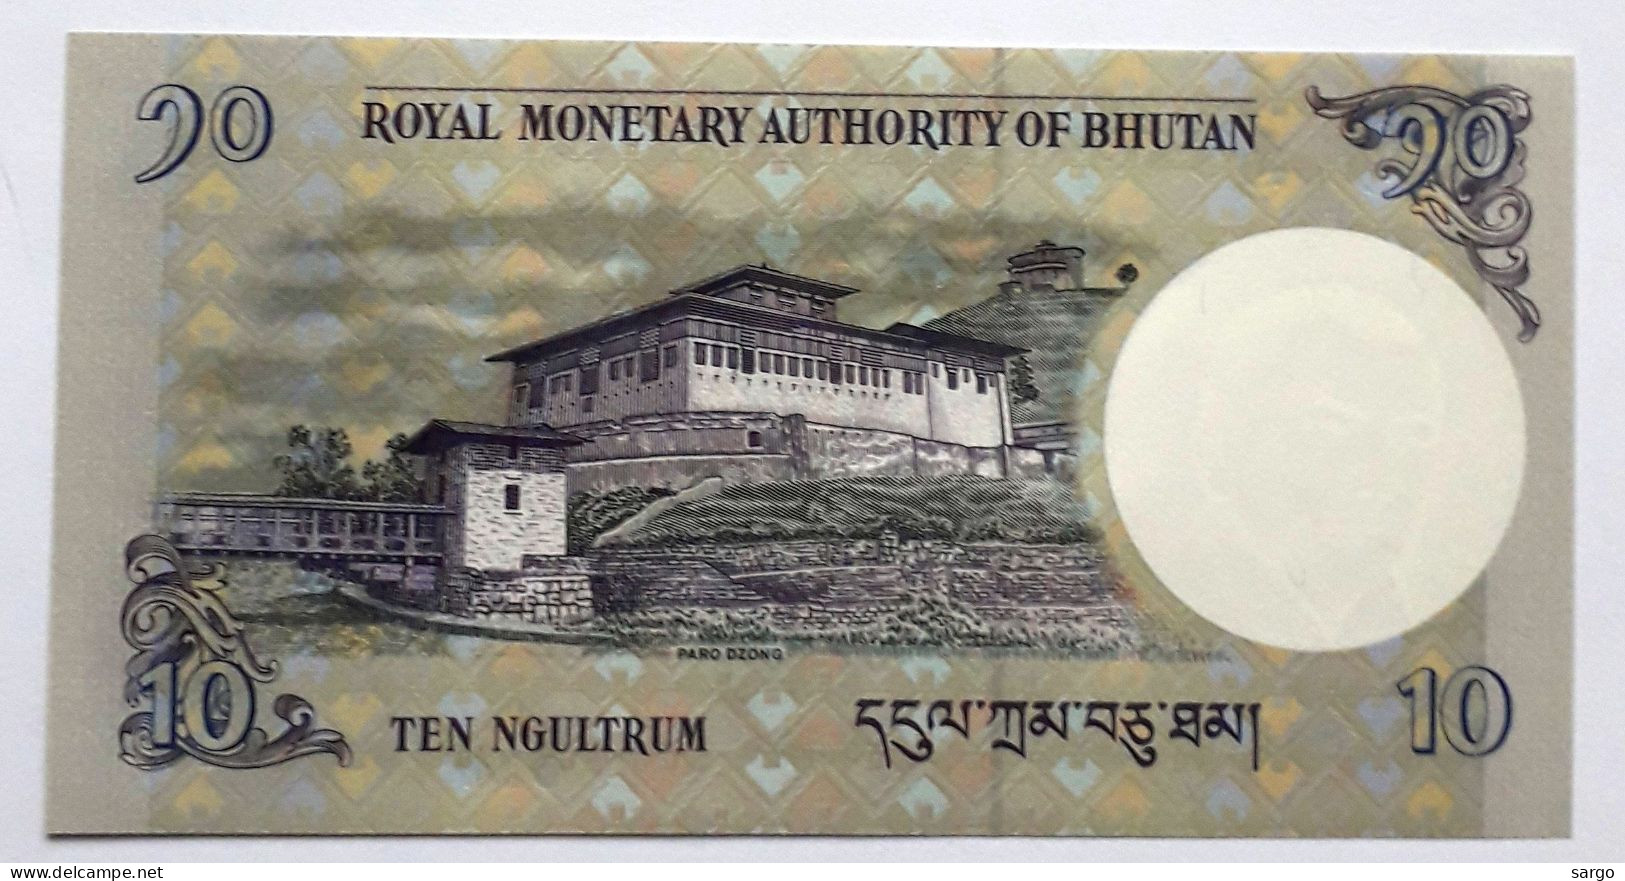 BHUTAN - 20 NGULTRUM - P 29 -  (2013) - UNC - BANKNOTES - PAPER MONEY - CARTAMONETA - - Bhutan